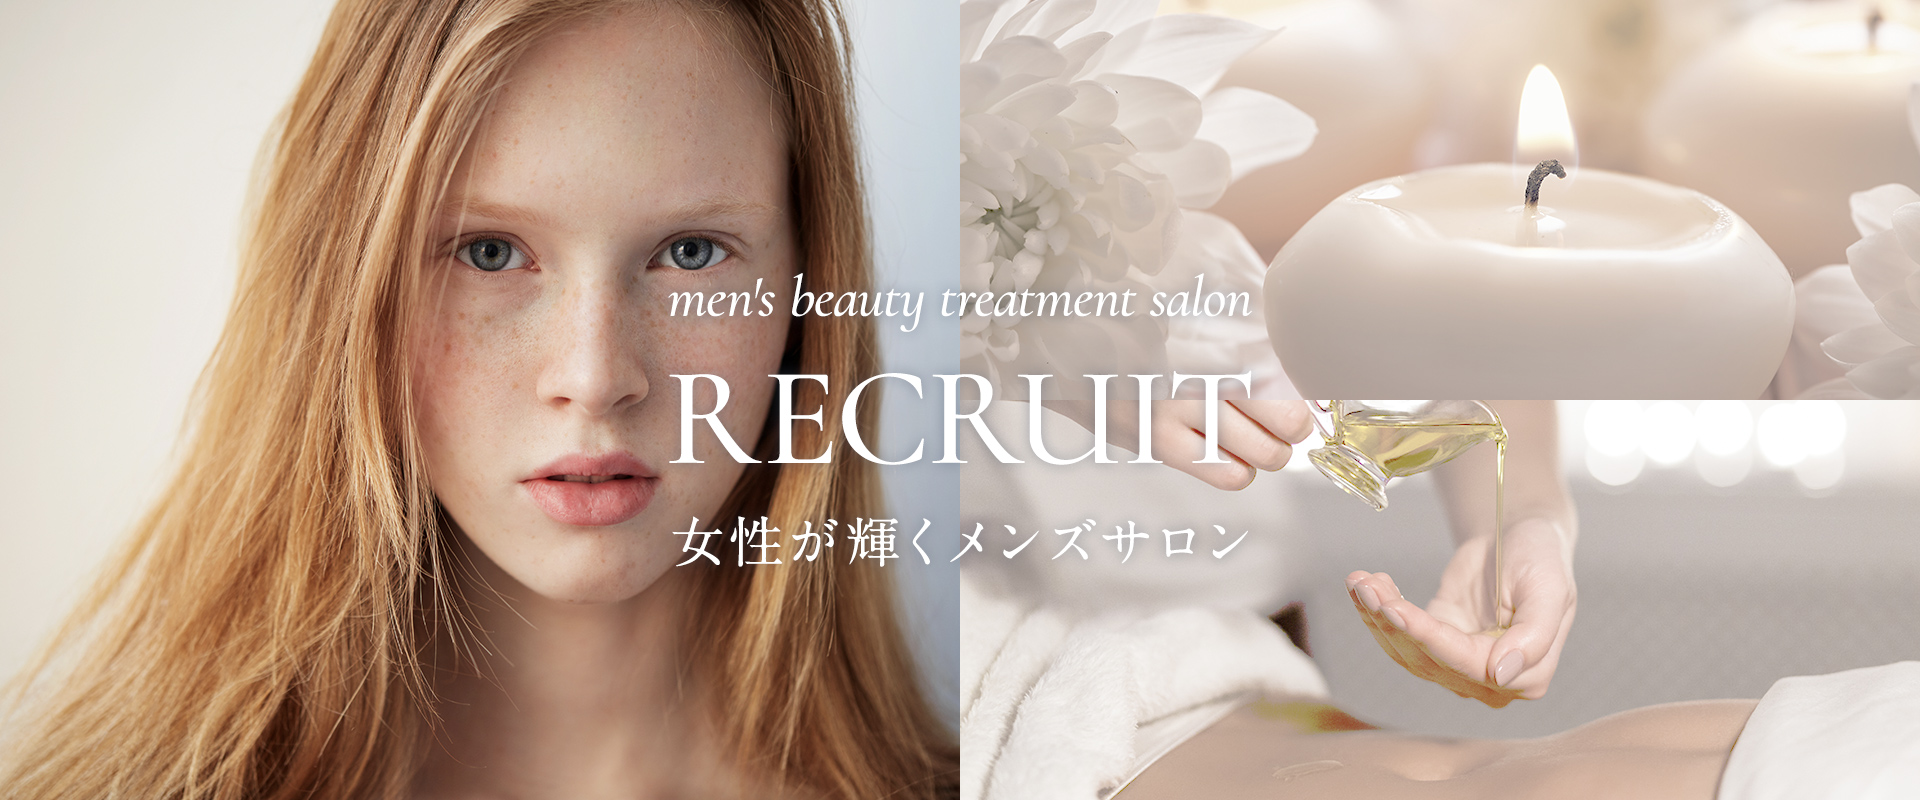 men's beauty treatment salon RECRUIT 女性が輝くメンズサロン